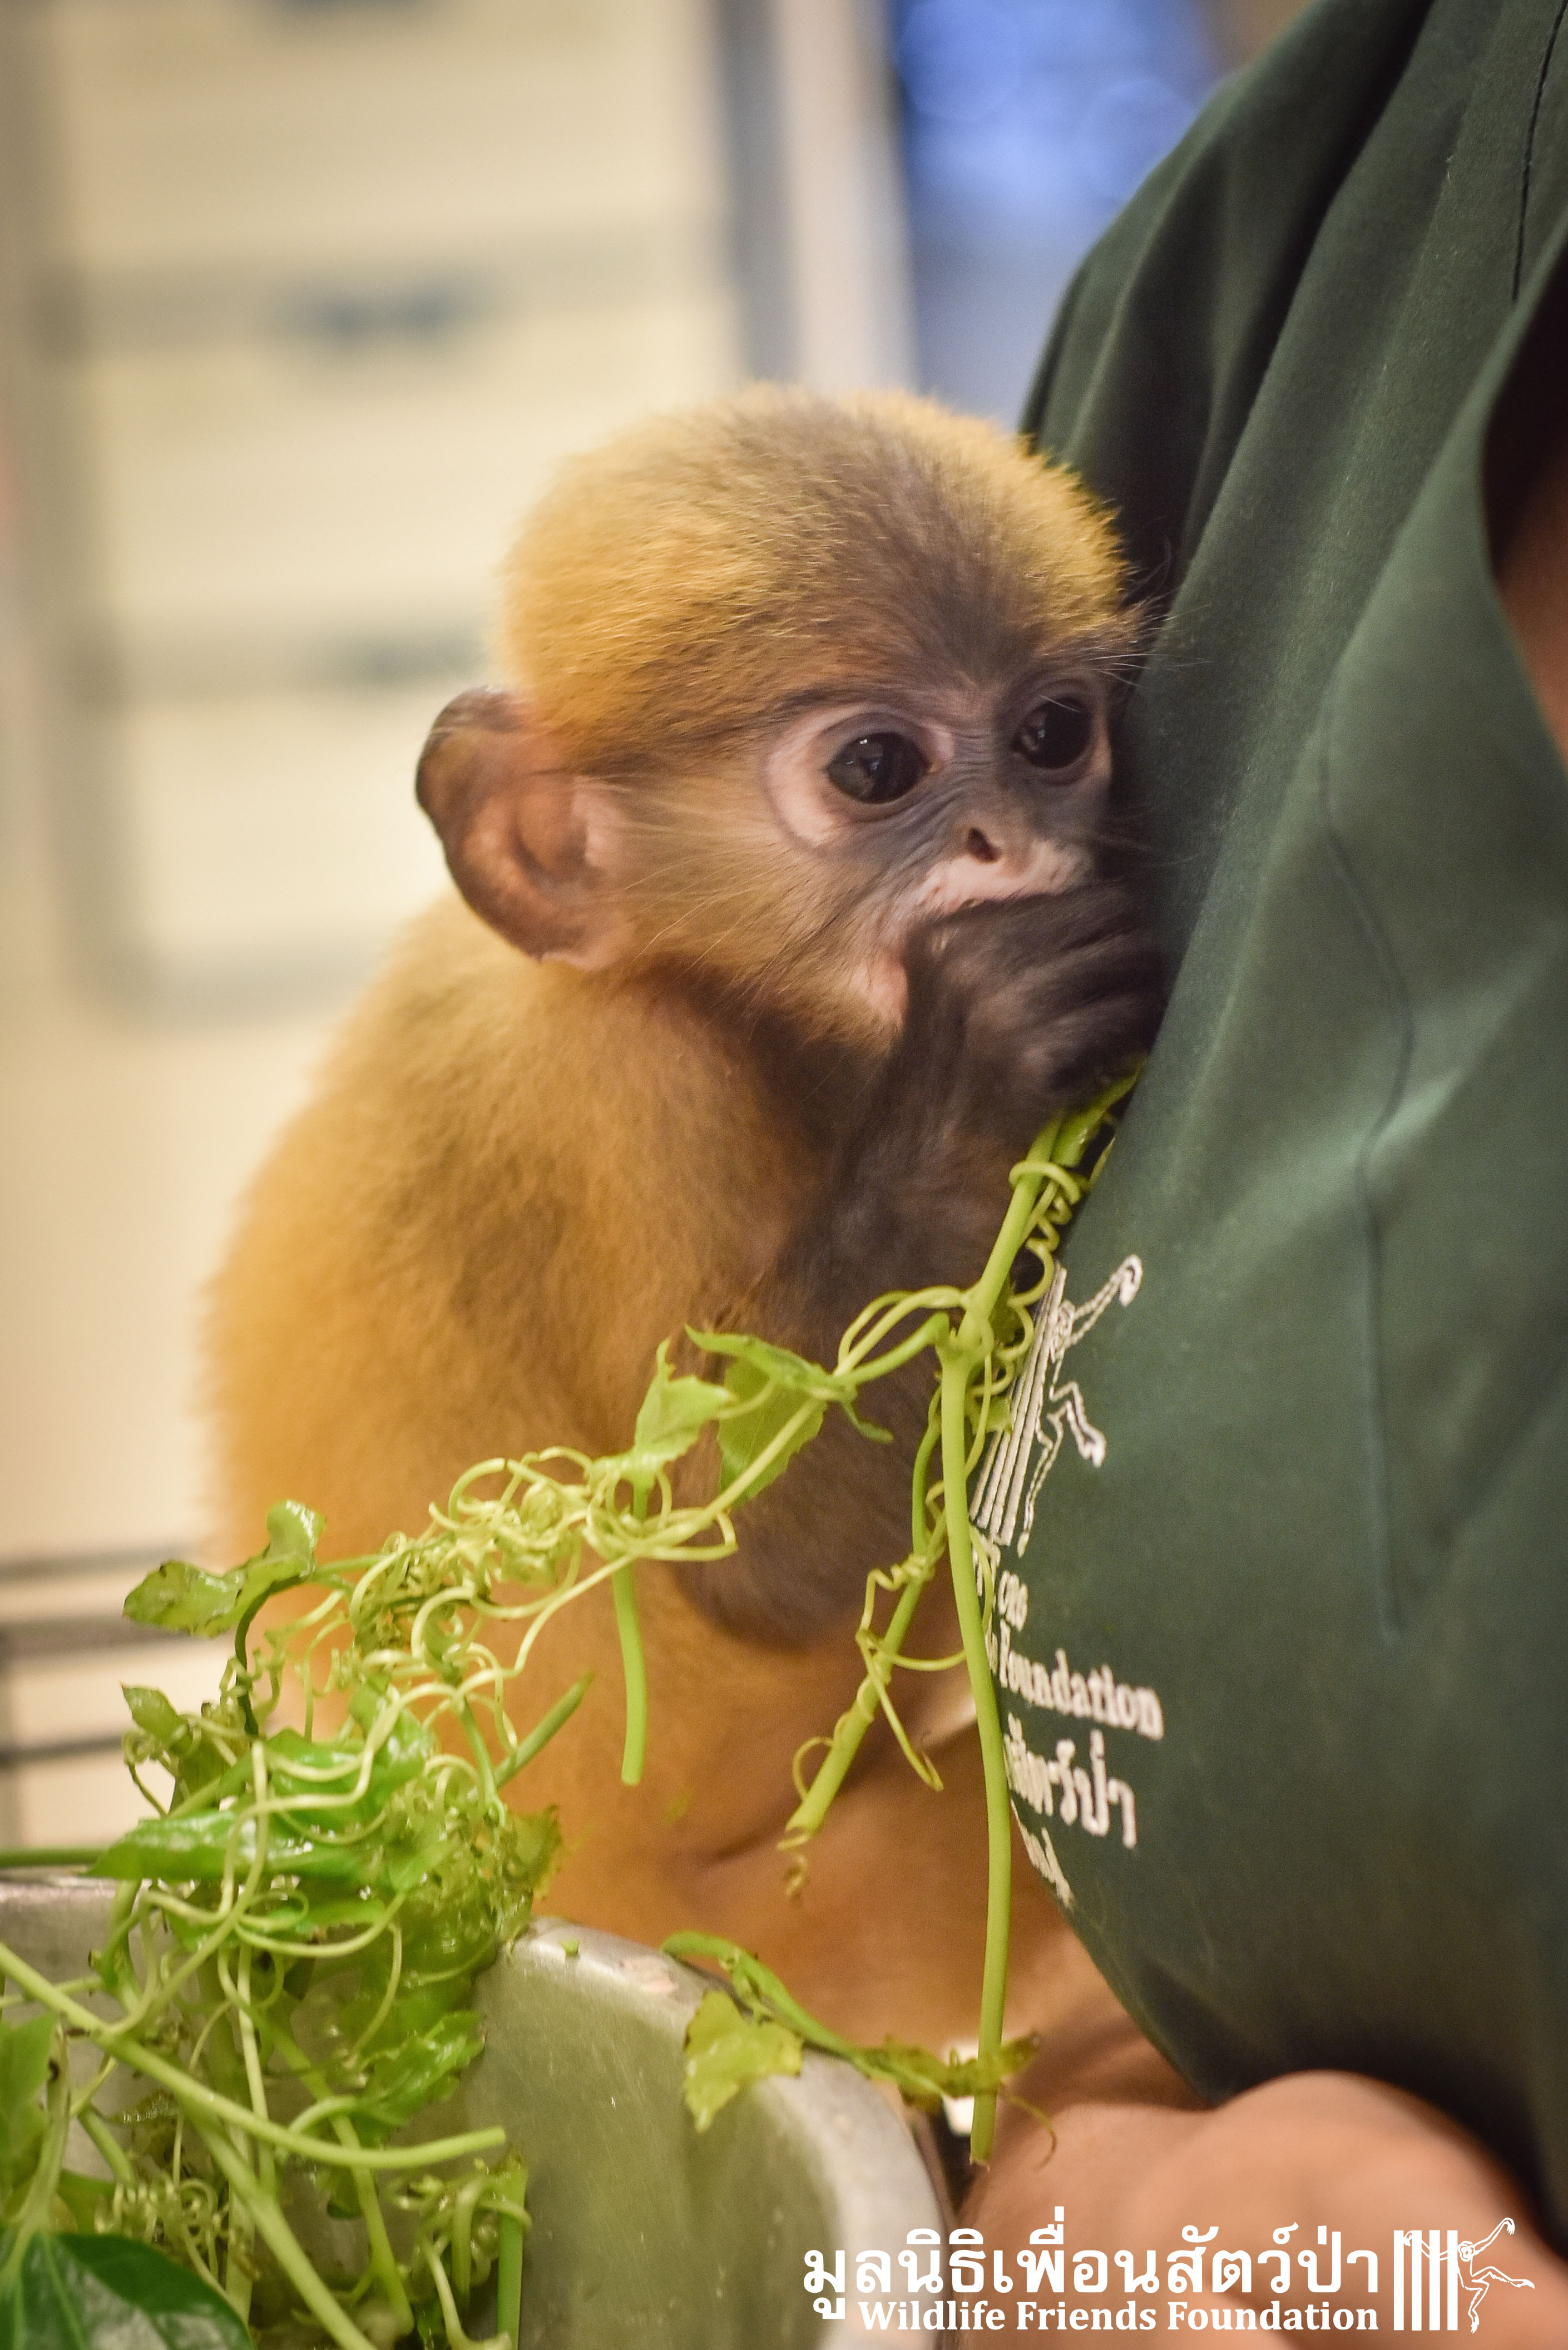 Dusky Leaf Monkey Nursing a Baby